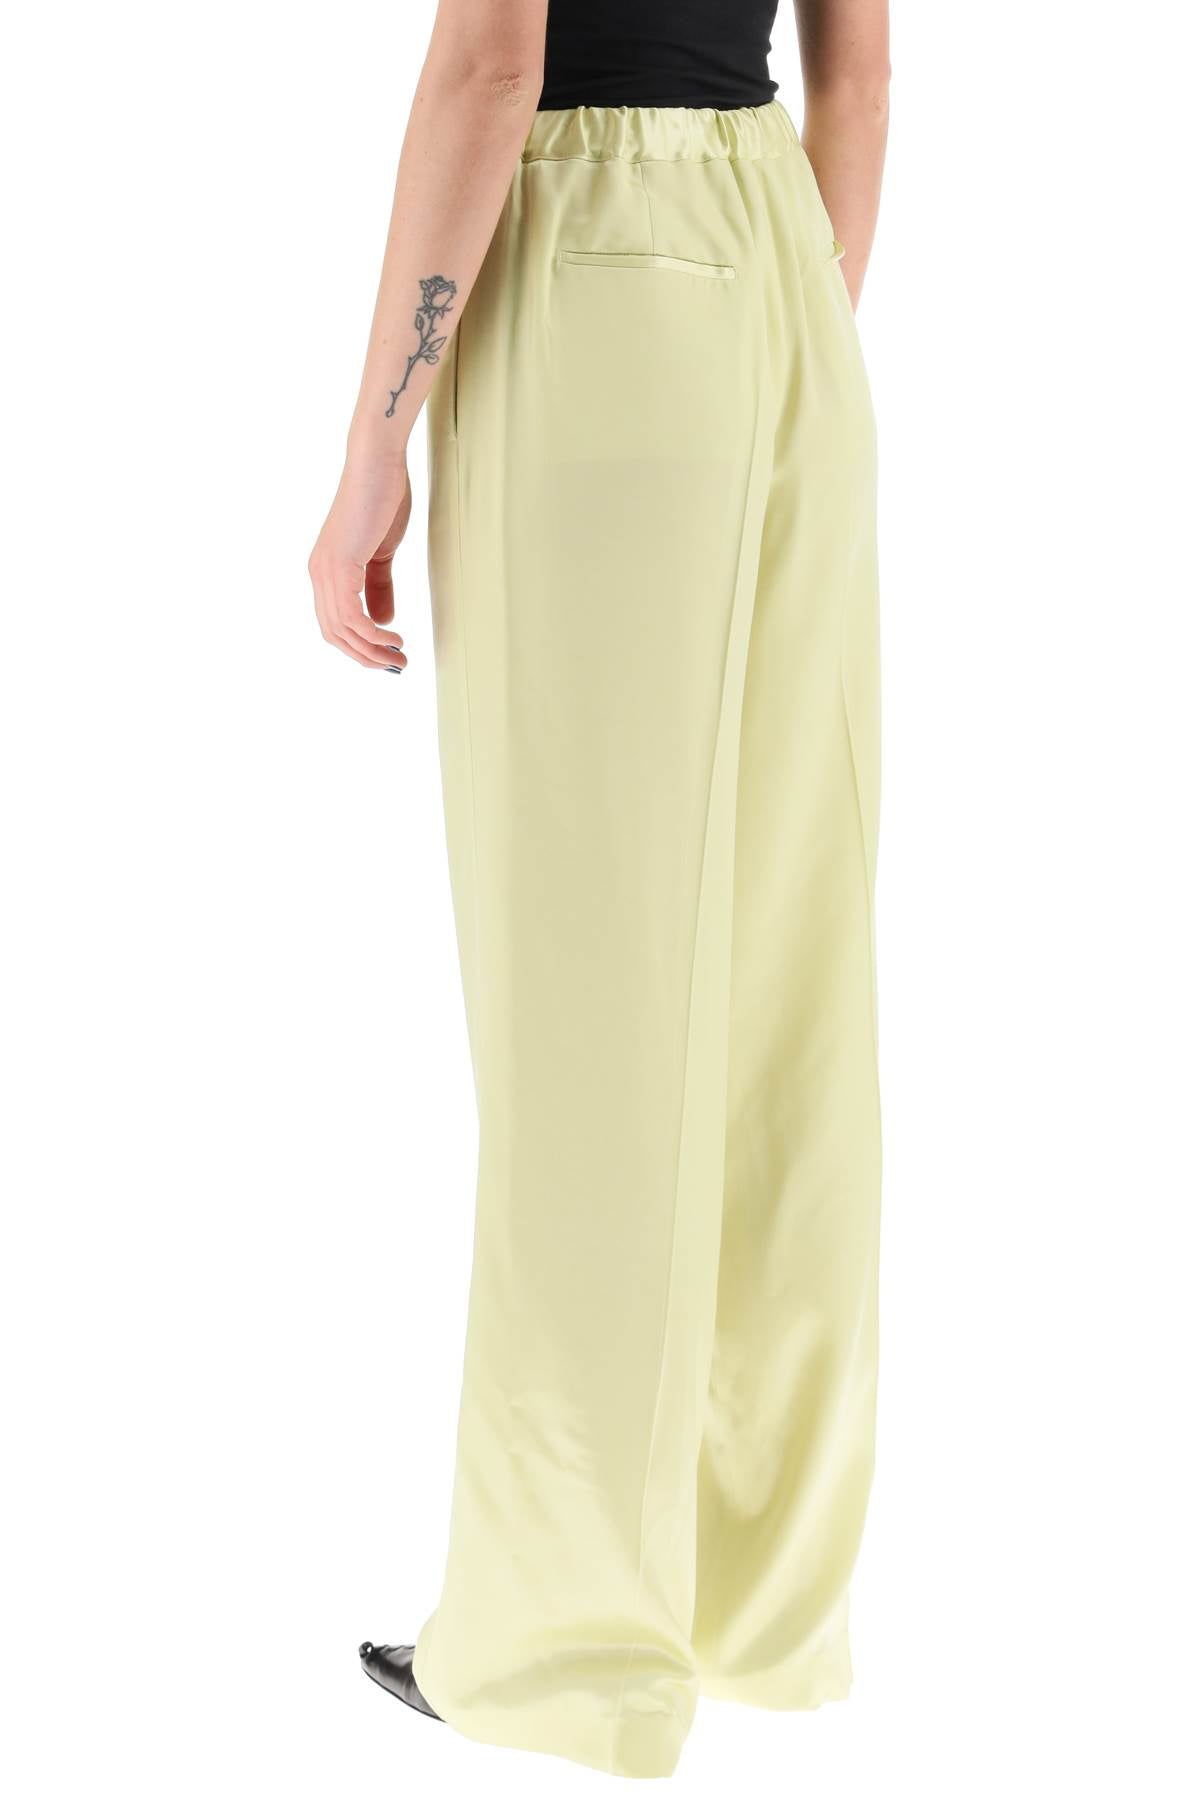 JIL SANDER Yellow Satin Wide Leg Pants for Women - Straight Loose Cut Viscose-Blend Pants for Spring/Summer 2024